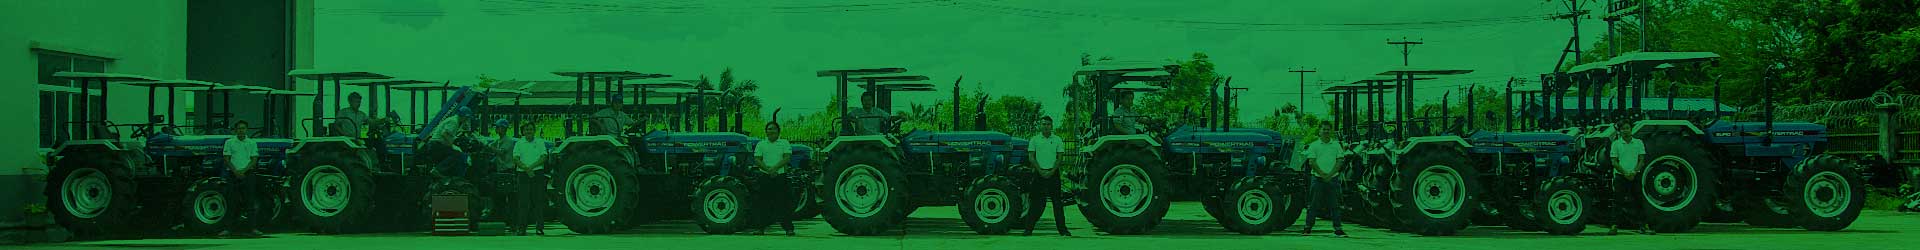 banner farm tractor